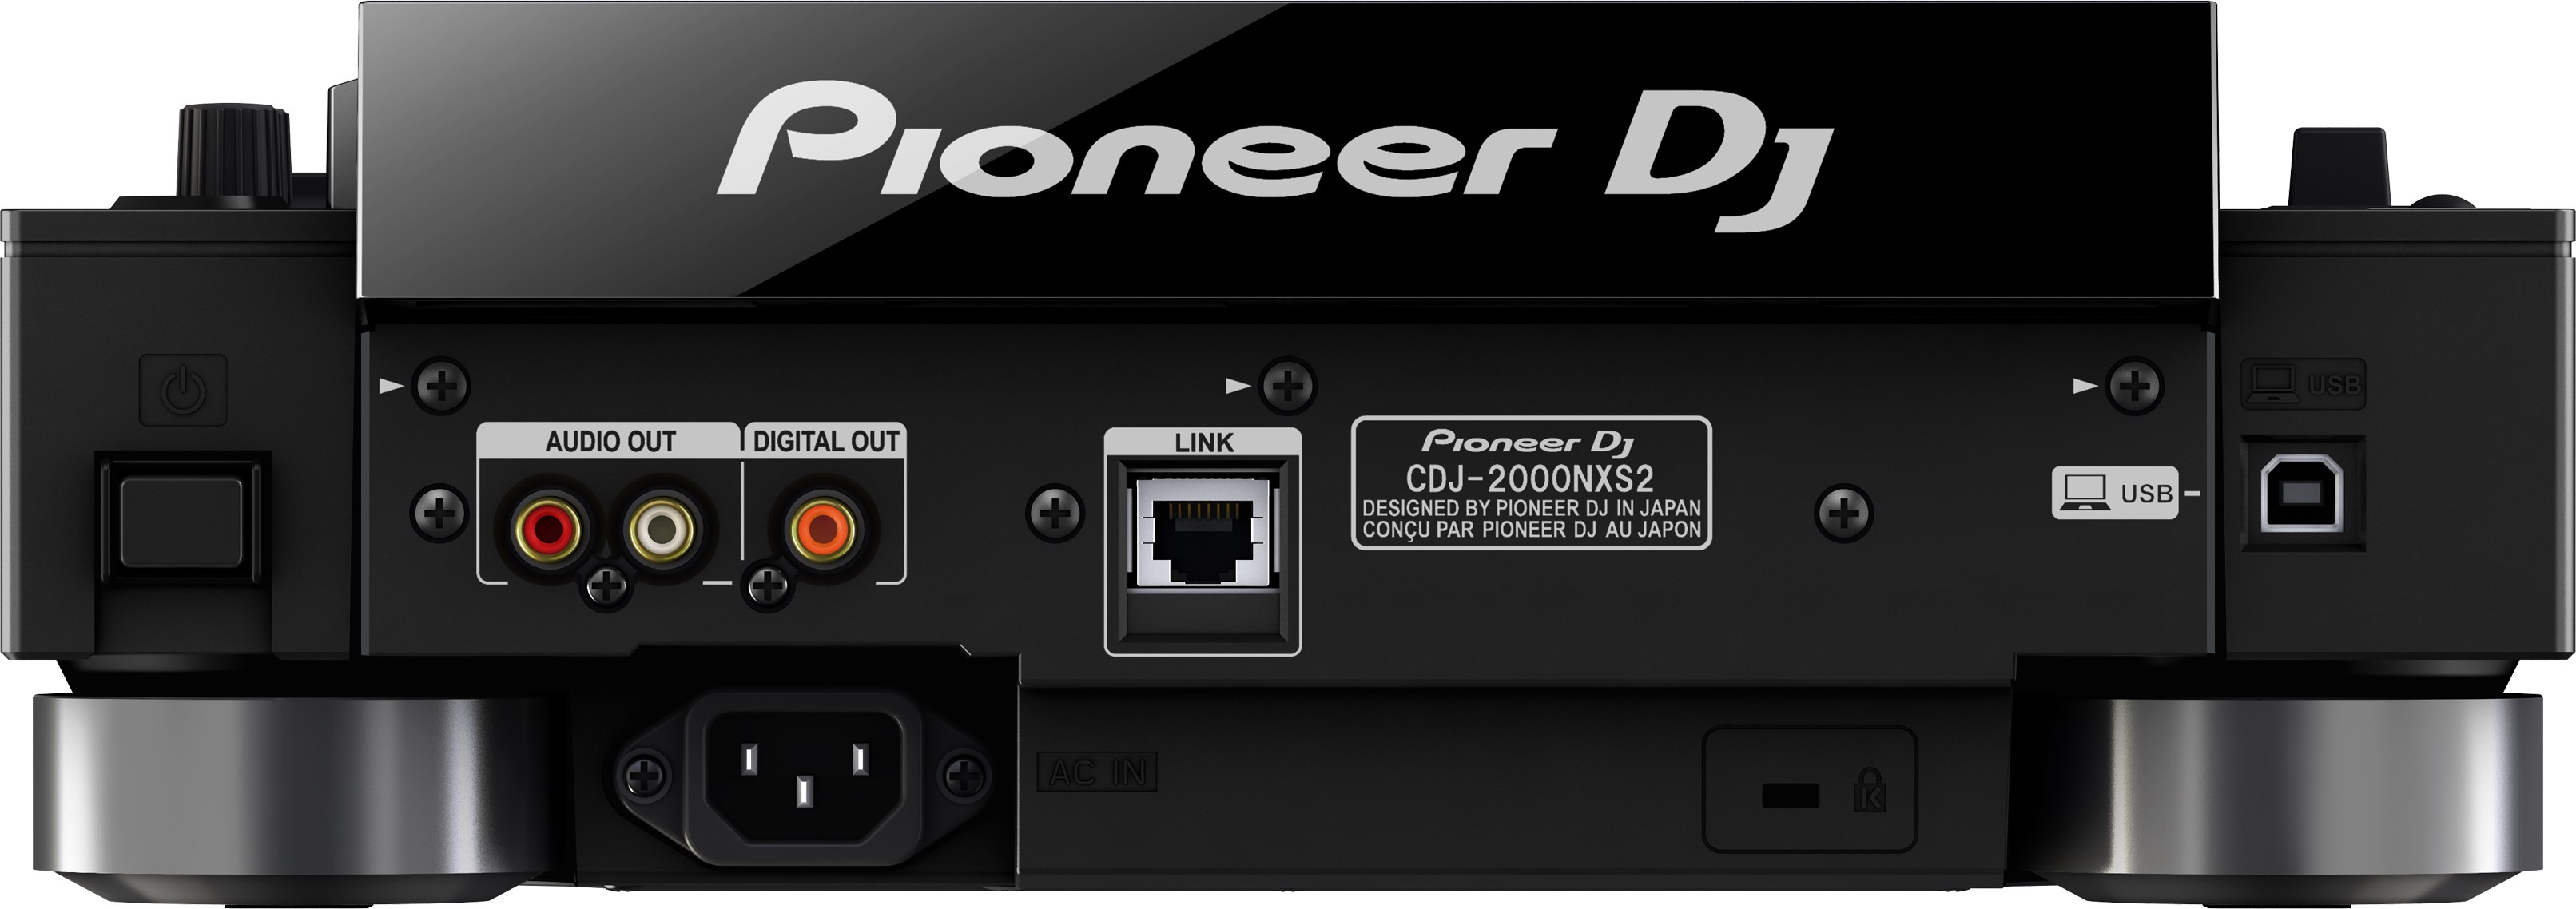 Pioneer Dj Cdj-2000nxs2 - MP3 & CD Turntable - Variation 2